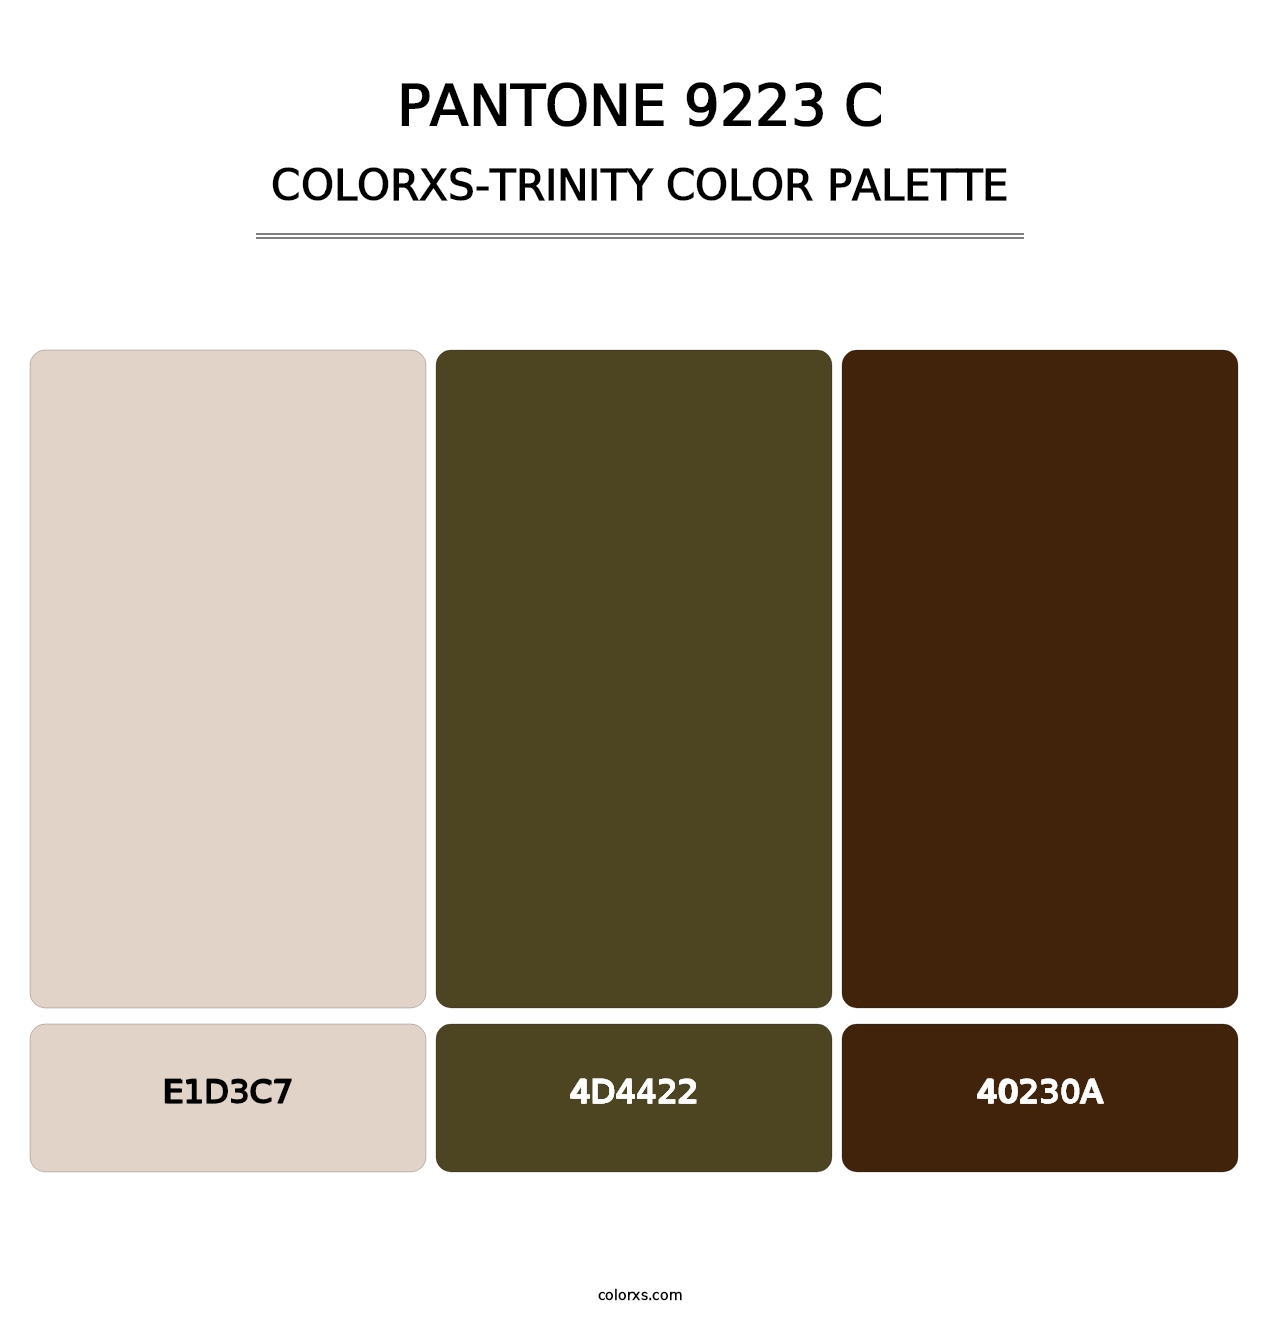 PANTONE 9223 C - Colorxs Trinity Palette